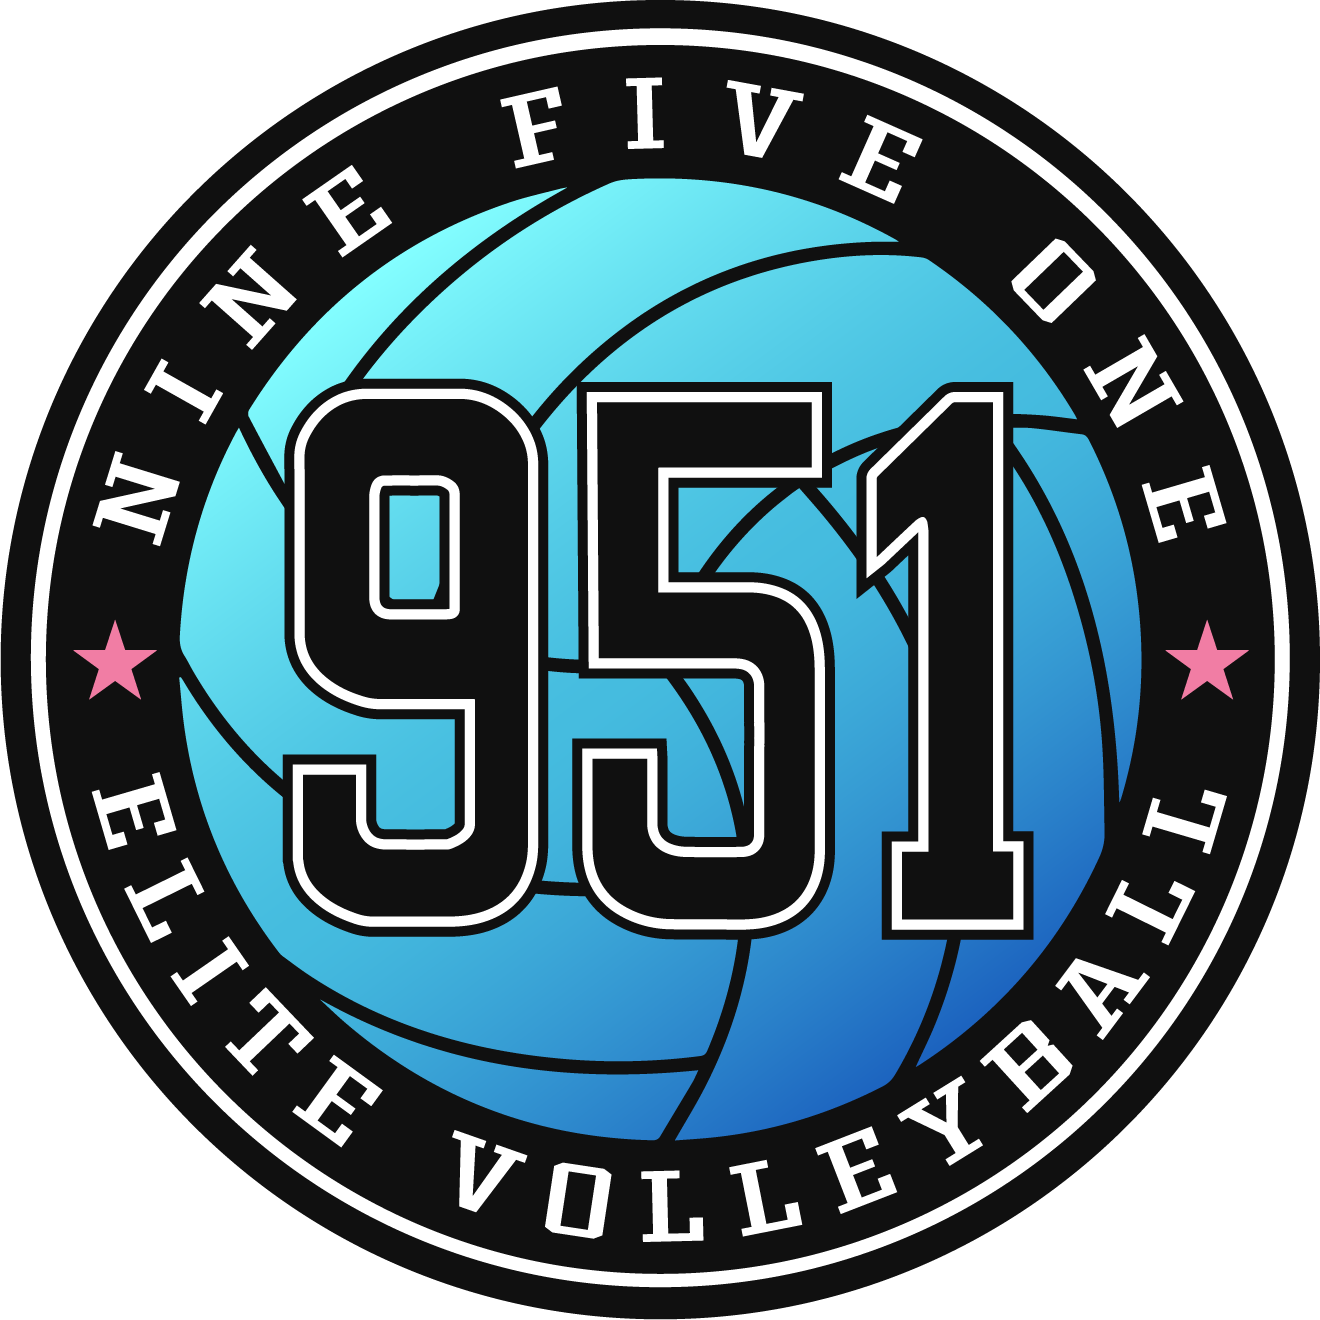 951 Elite Volleyball Club